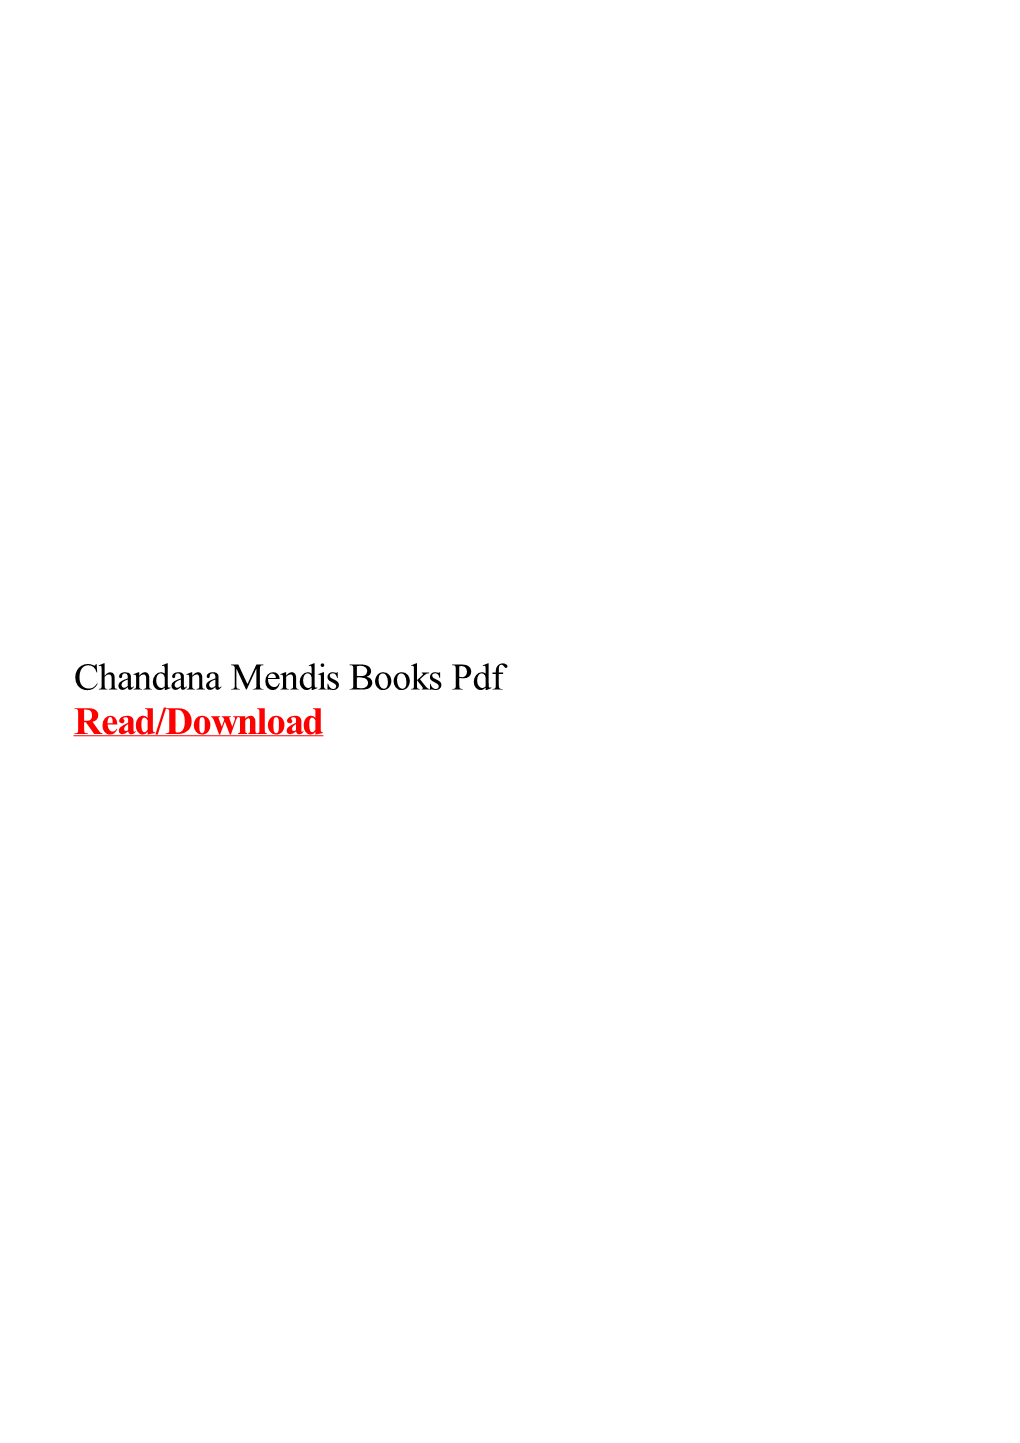 Chandana Mendis Books Pdf